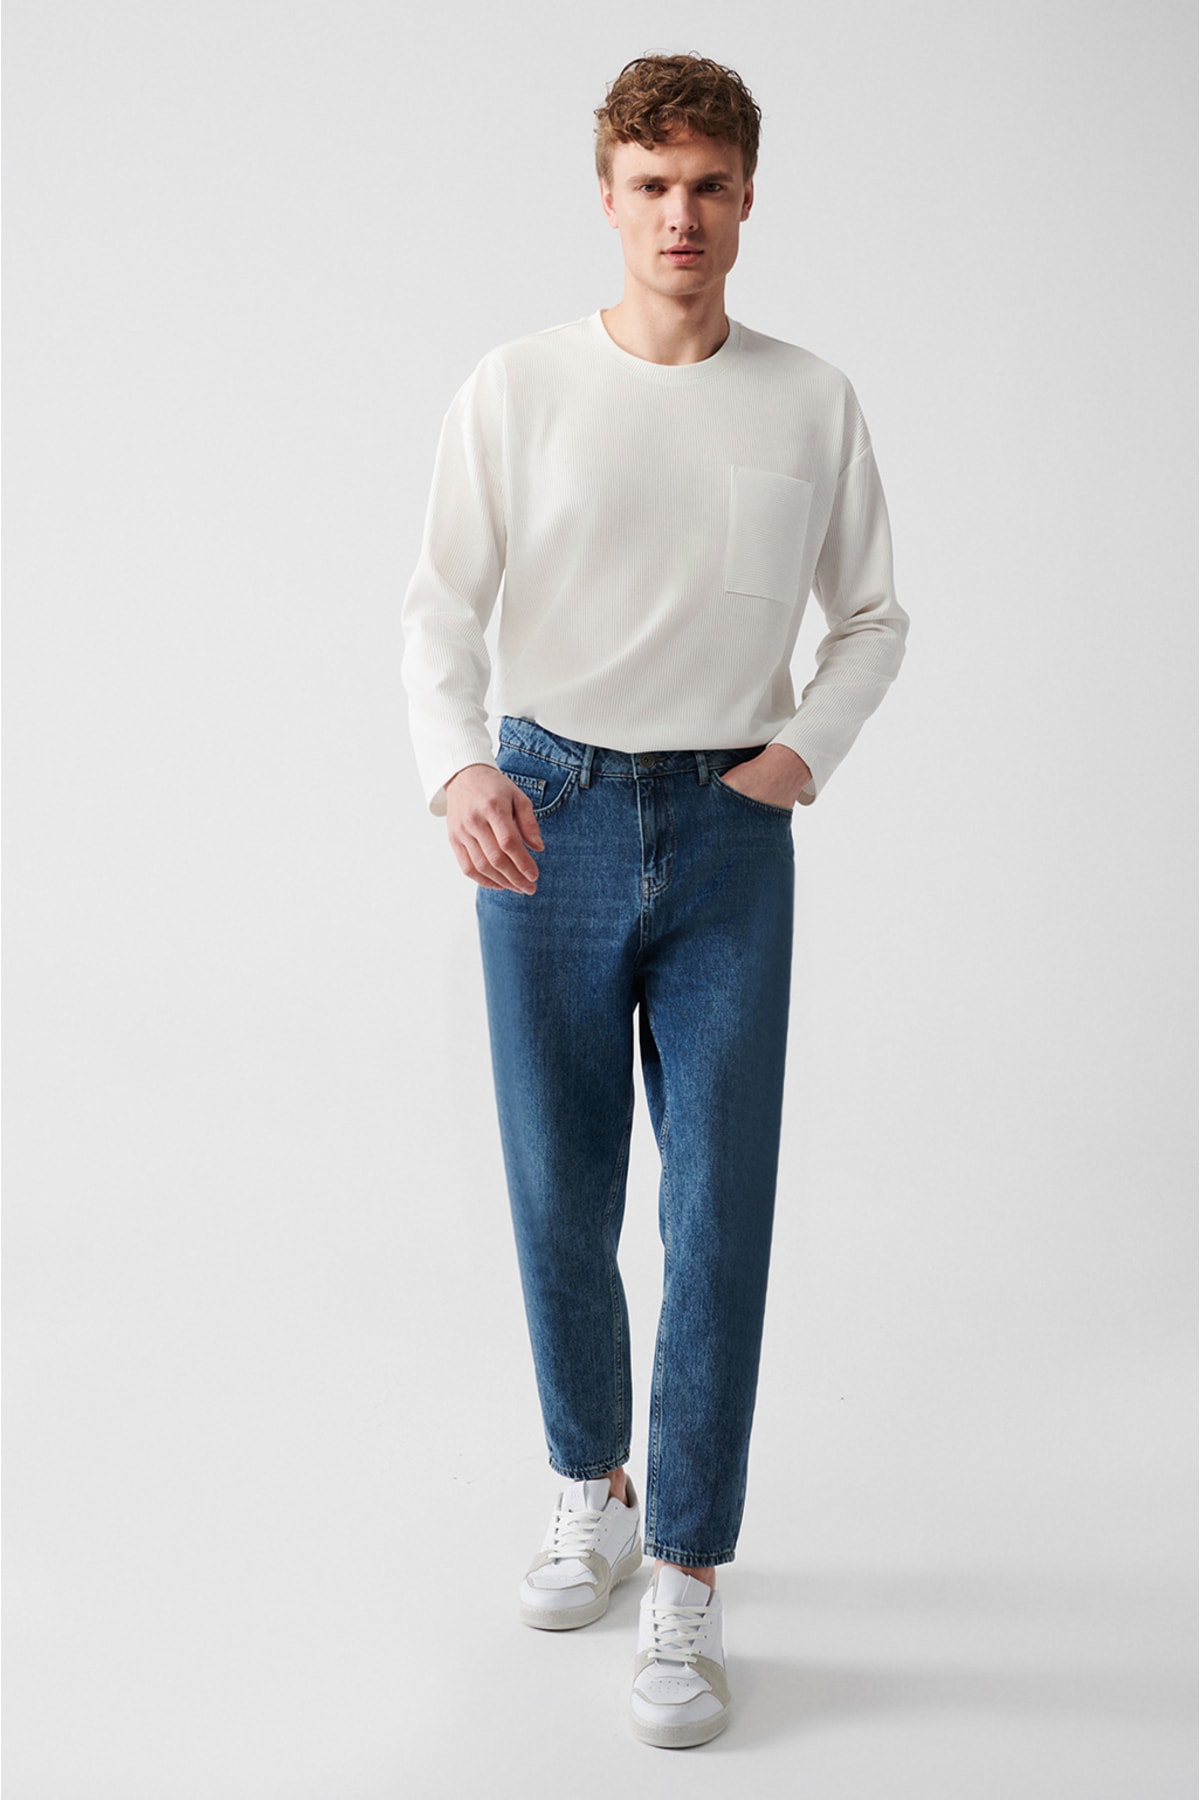 Avva Men's Blue Oslo Random Wash 100% Cotton Carrot Fit Jeans